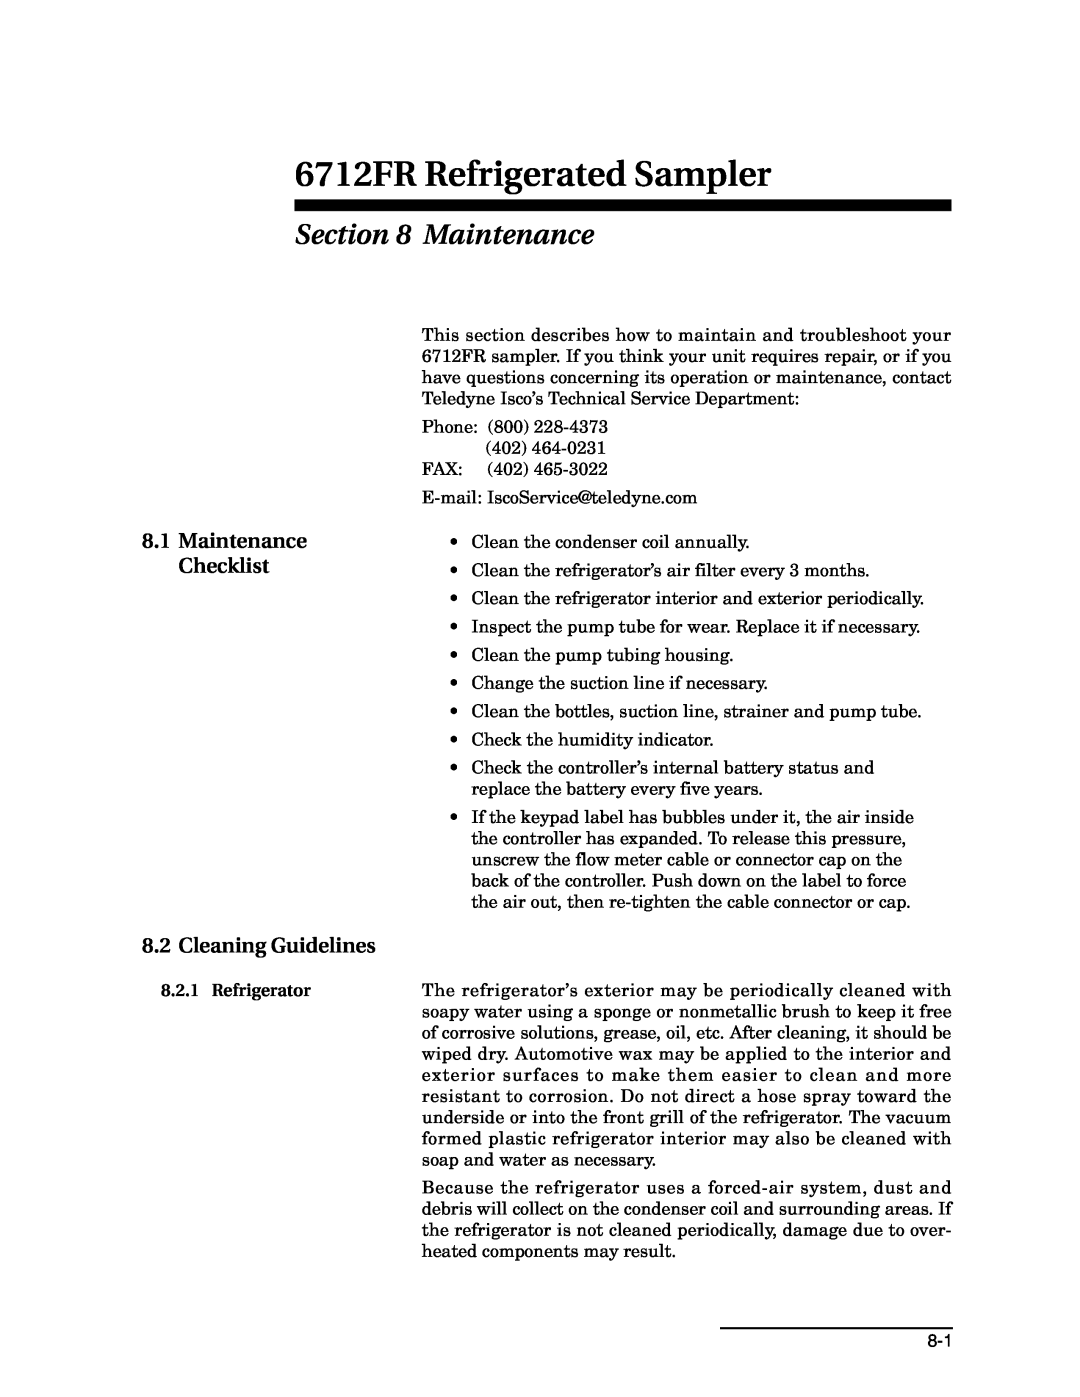 Teledyne manual Maintenance Checklist, Cleaning Guidelines, 6712FR Refrigerated Sampler, Refrigerator 